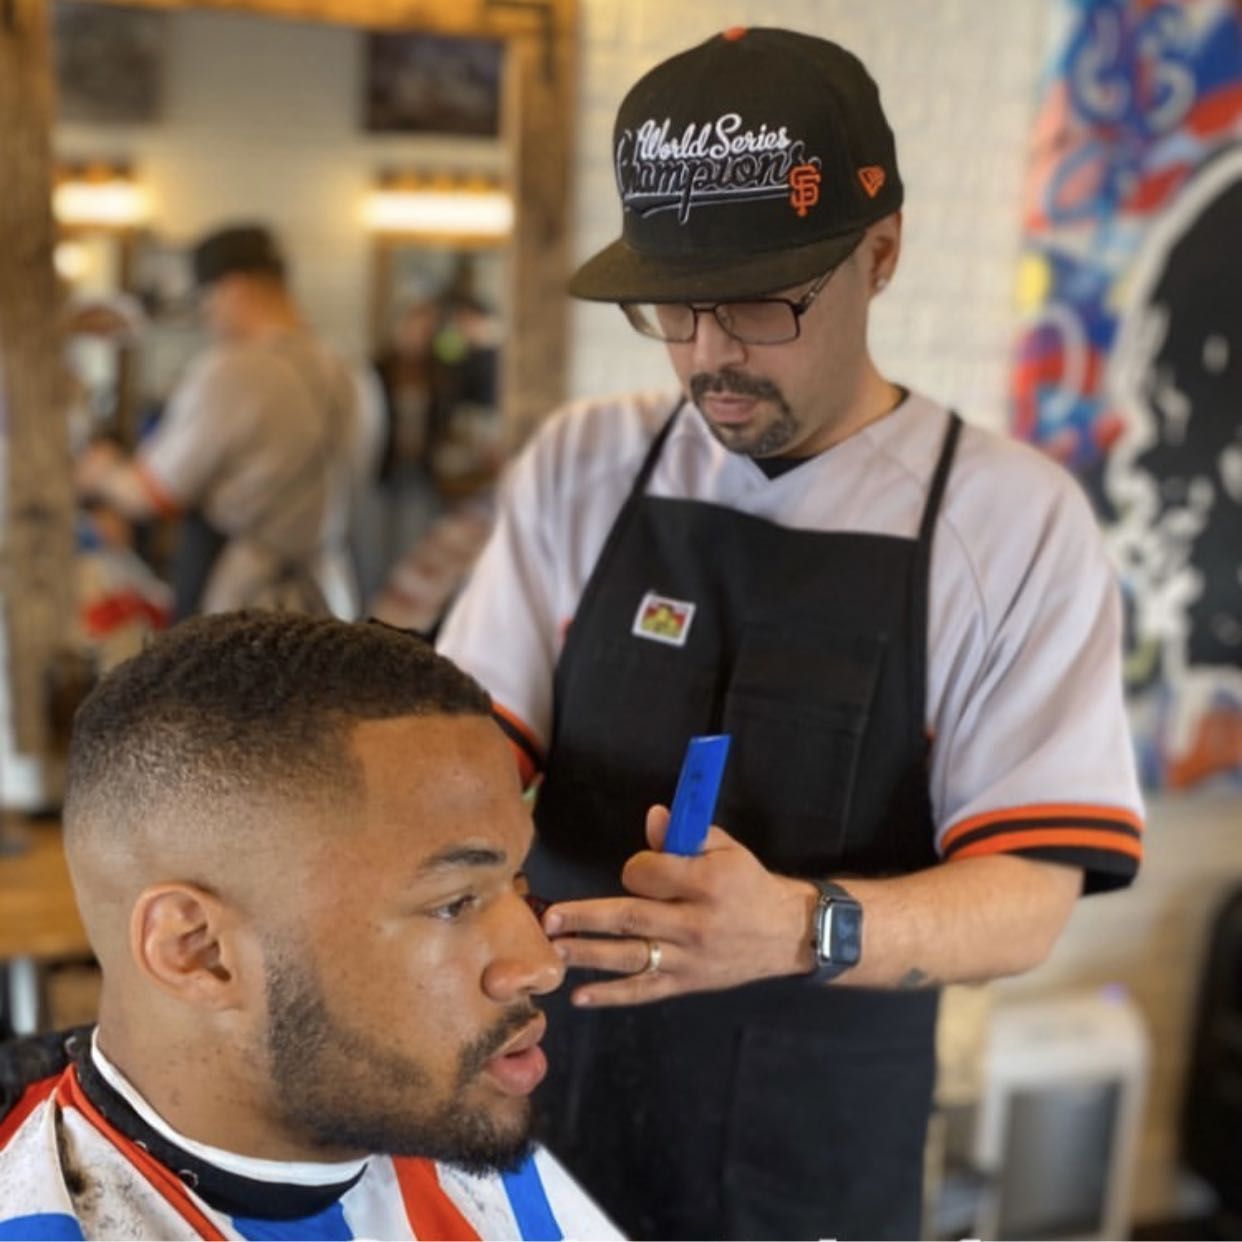 Martin “the Barber” Mejia, 223 W Yosemite Ave, Manteca, 95336